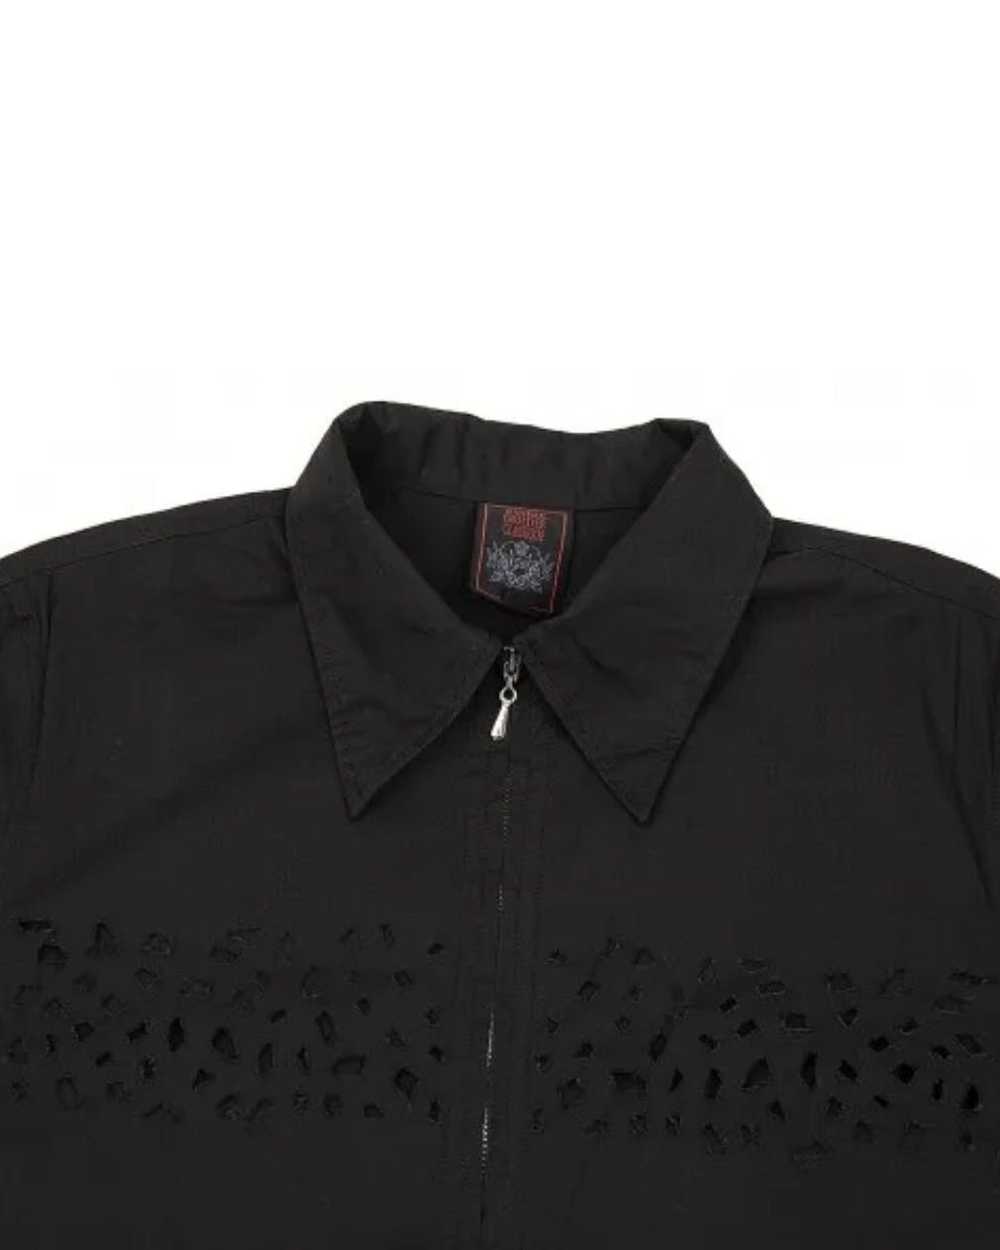 Jean Paul Gaultier Laser-Cut Zip-Up Shirt - image 2